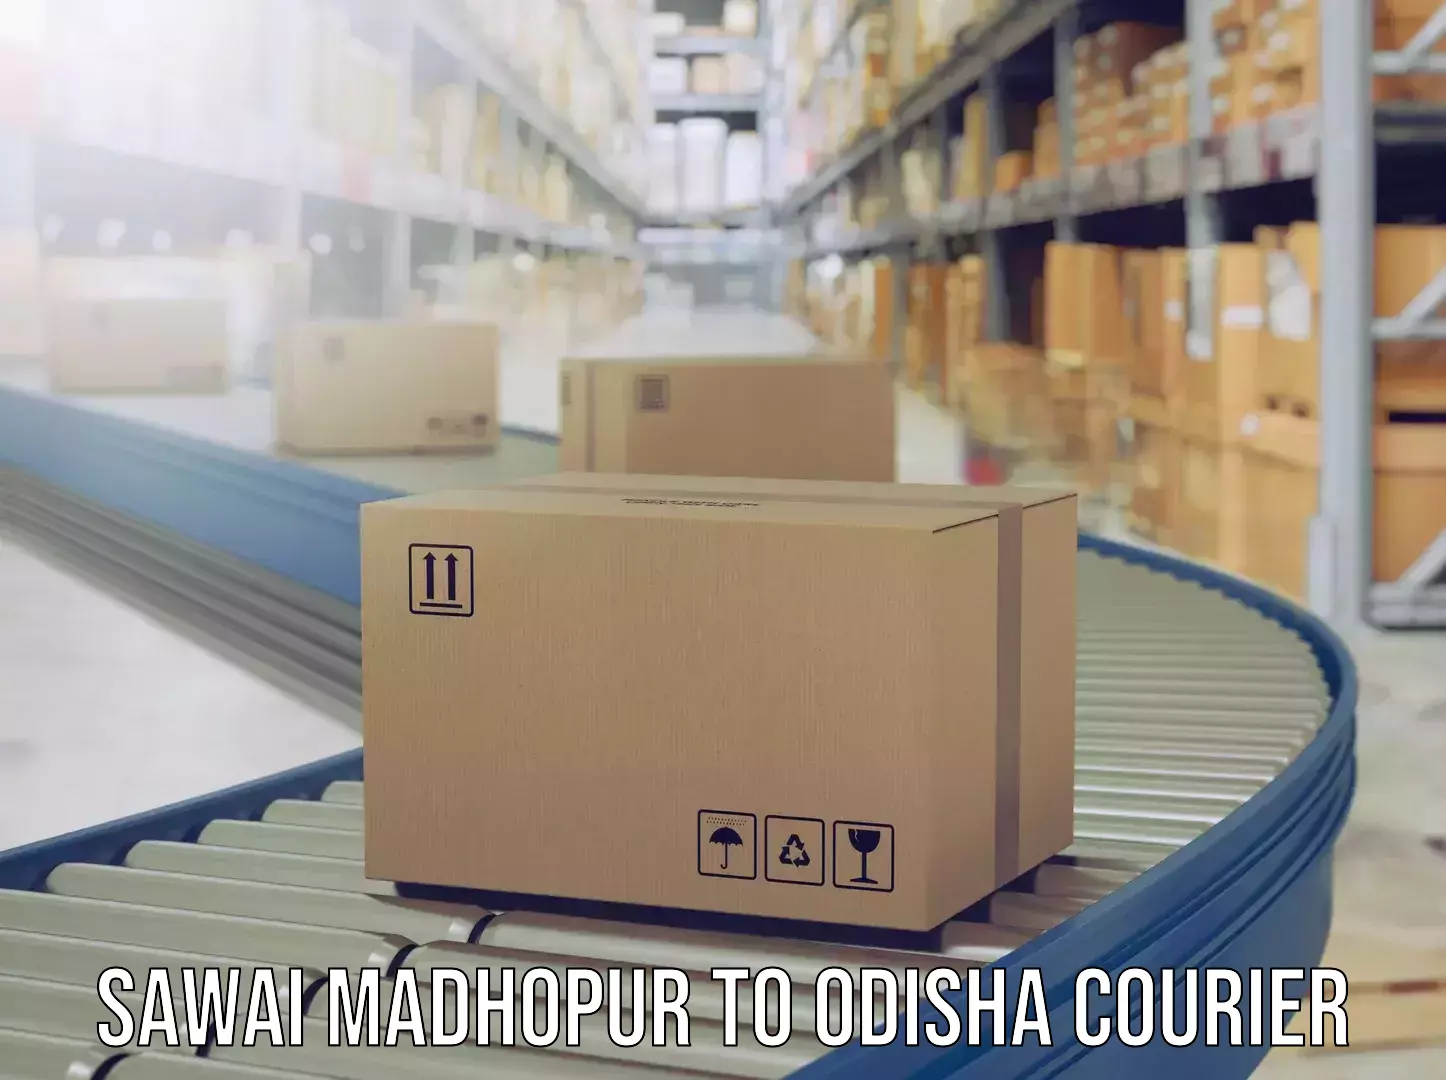 Luggage shipment specialists Sawai Madhopur to Odisha